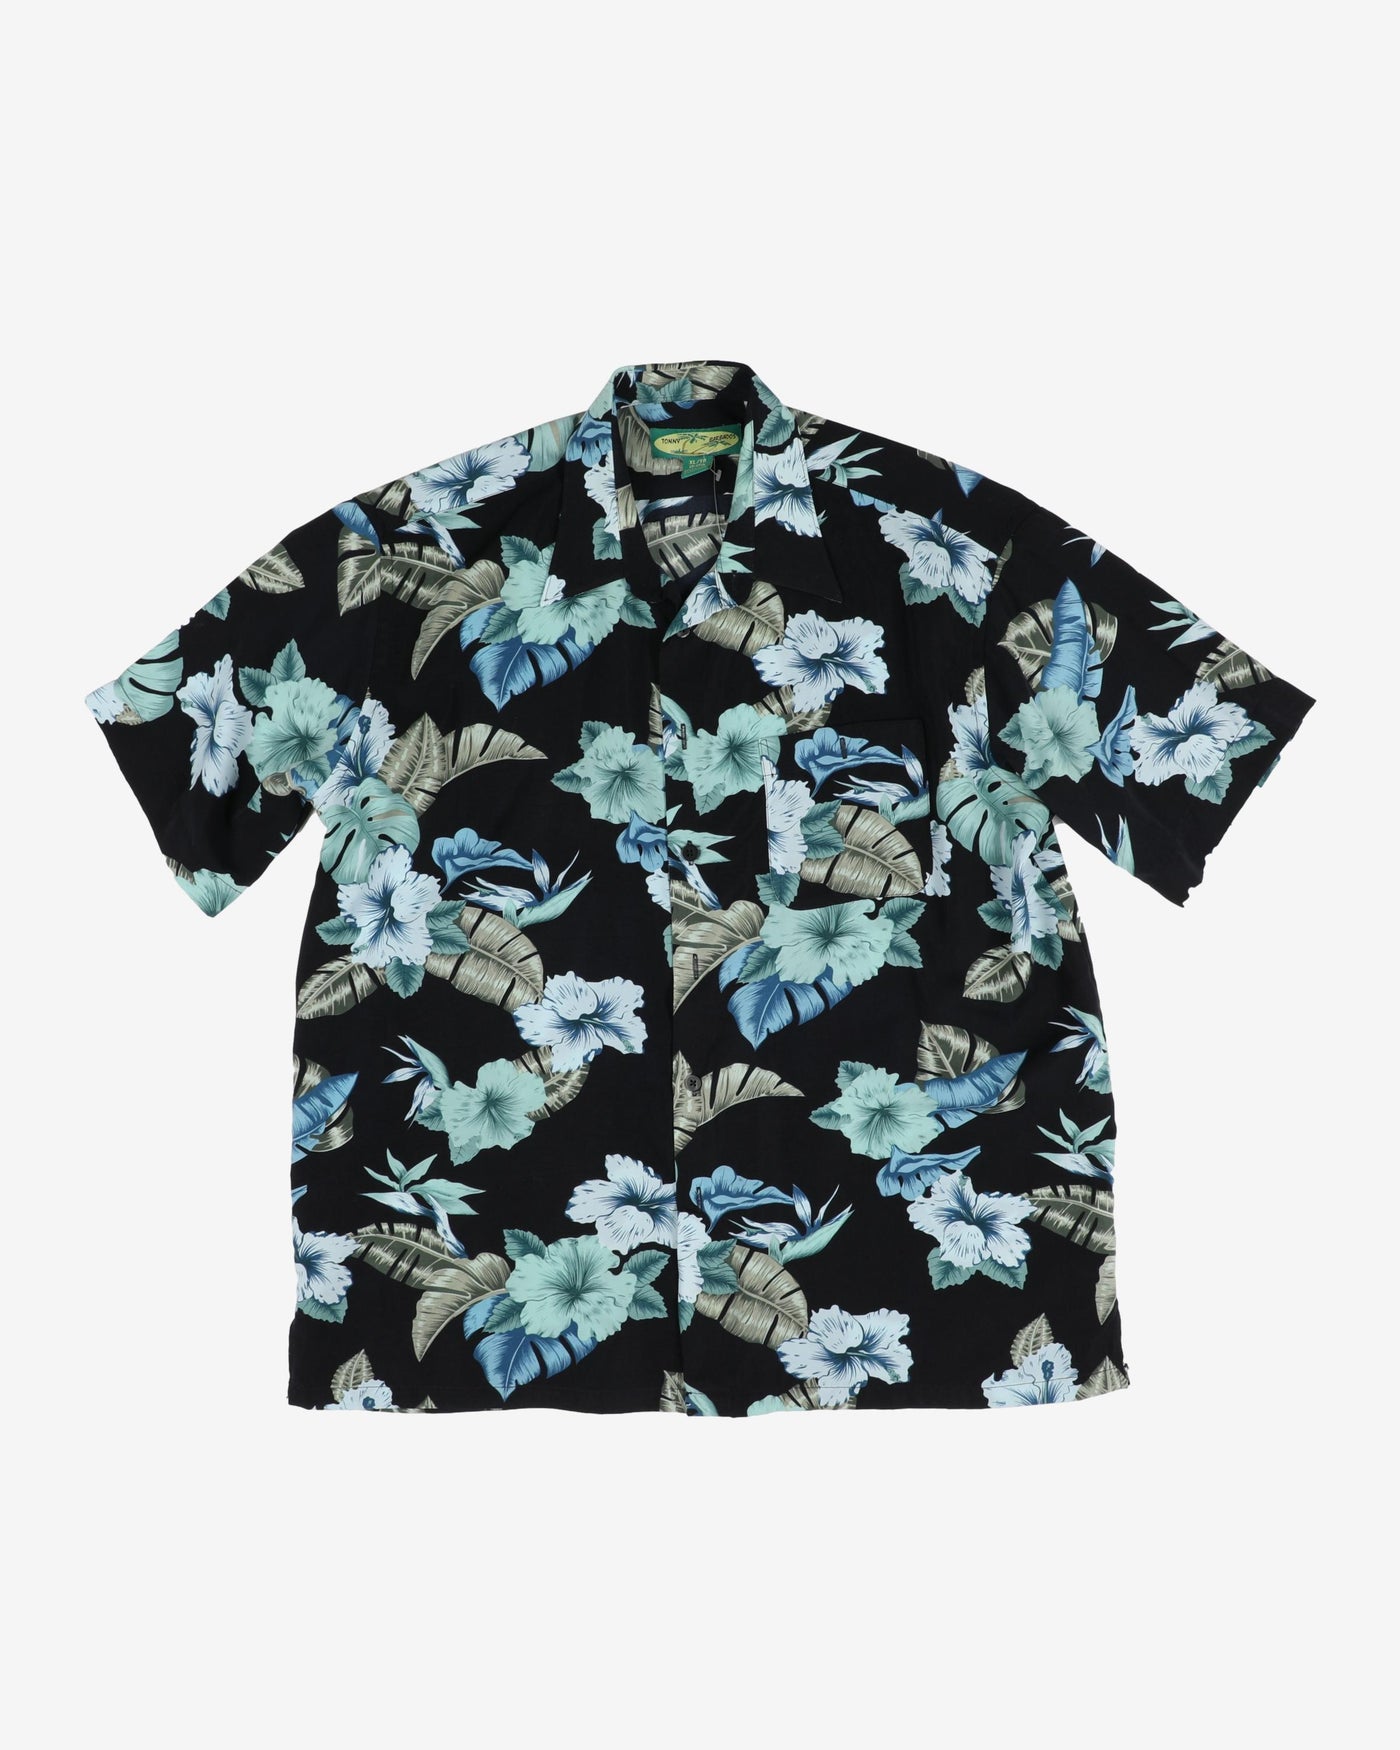 Tonny Barbados Black Floral Hawaiian Shirt - XL